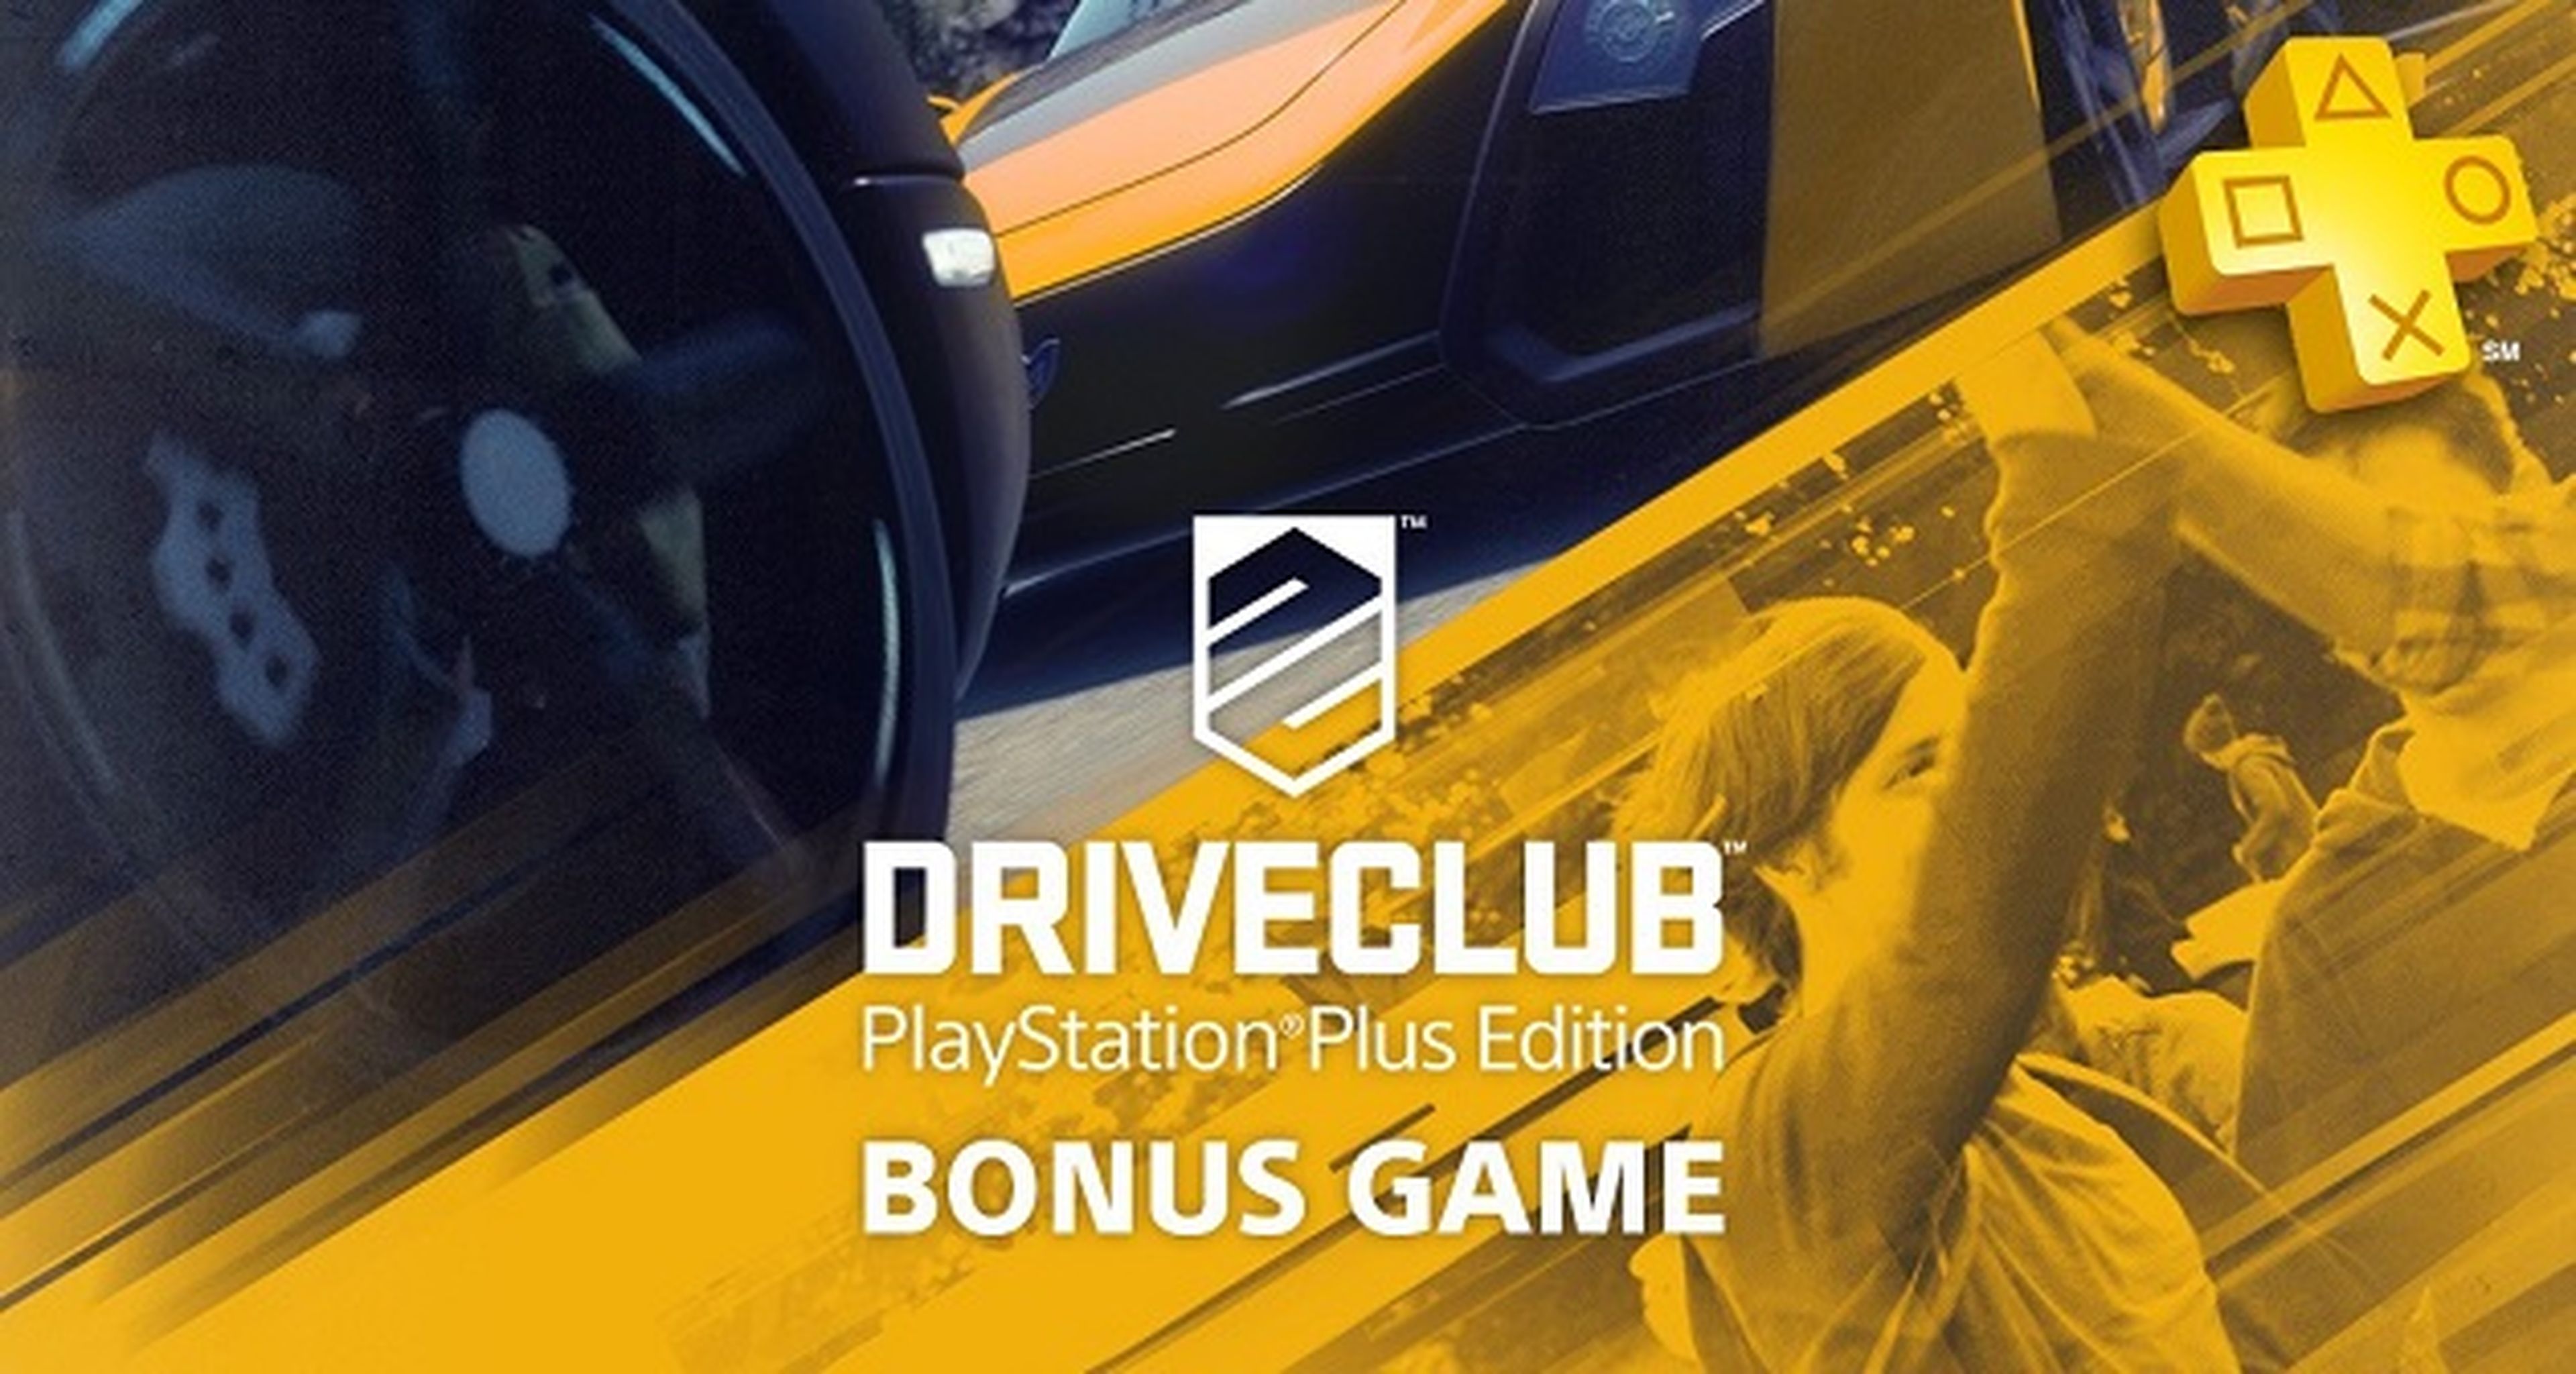 Driveclub PS Plus Edition saldrá &quot;lo antes posible&quot; según Sony